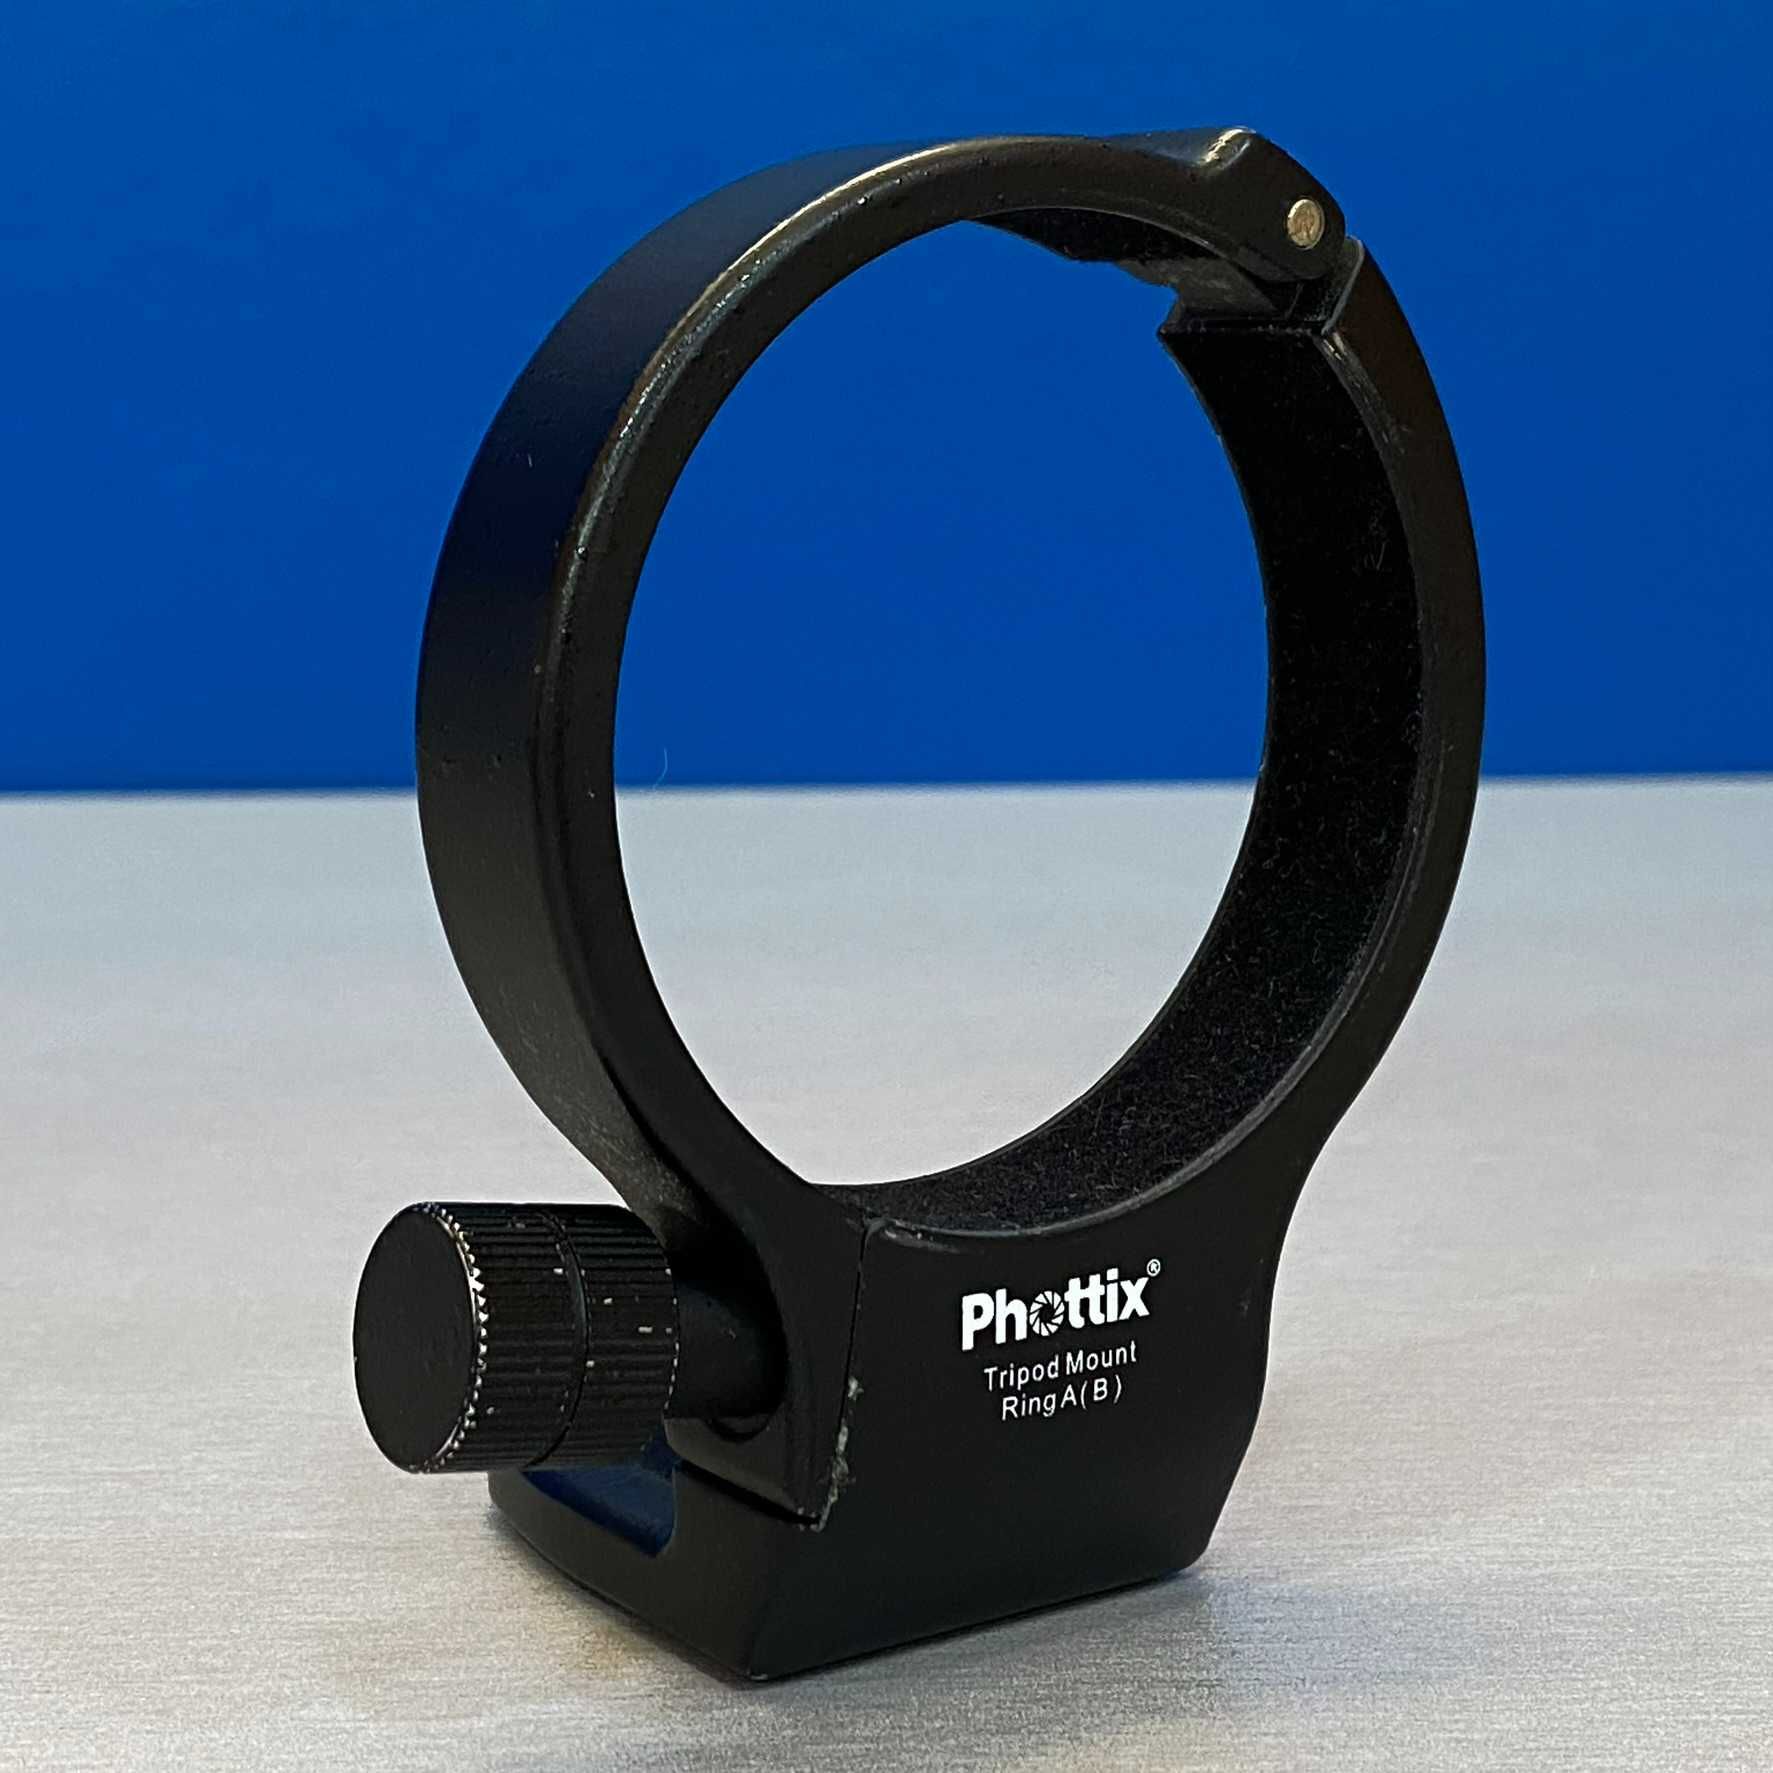 Phottix Tripod Mount Ring A (B) - Canon (70-200mm f/4)